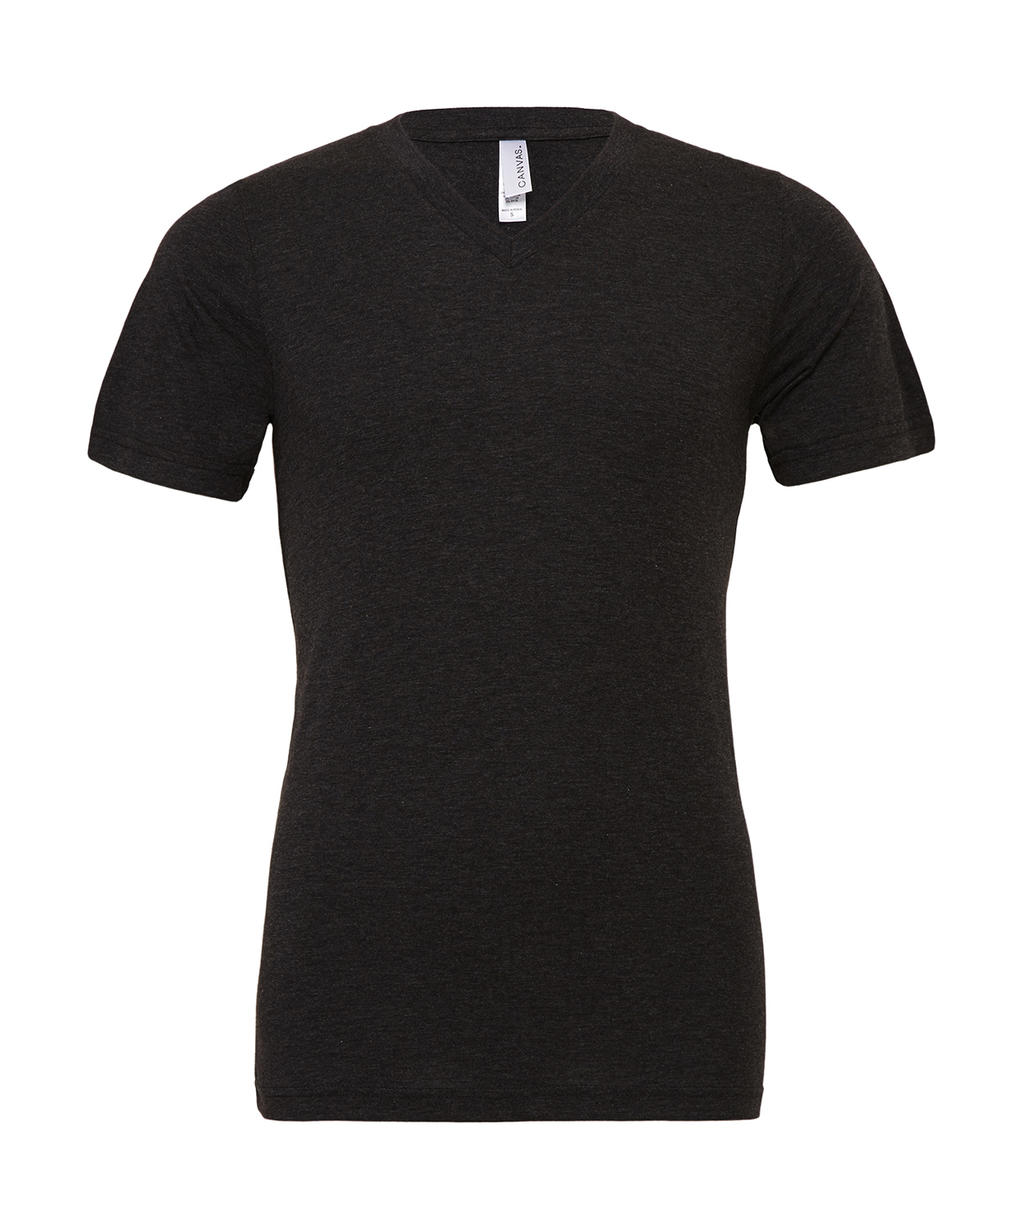  Unisex Triblend V-Neck T-Shirt in Farbe Charcoal-Black Triblend